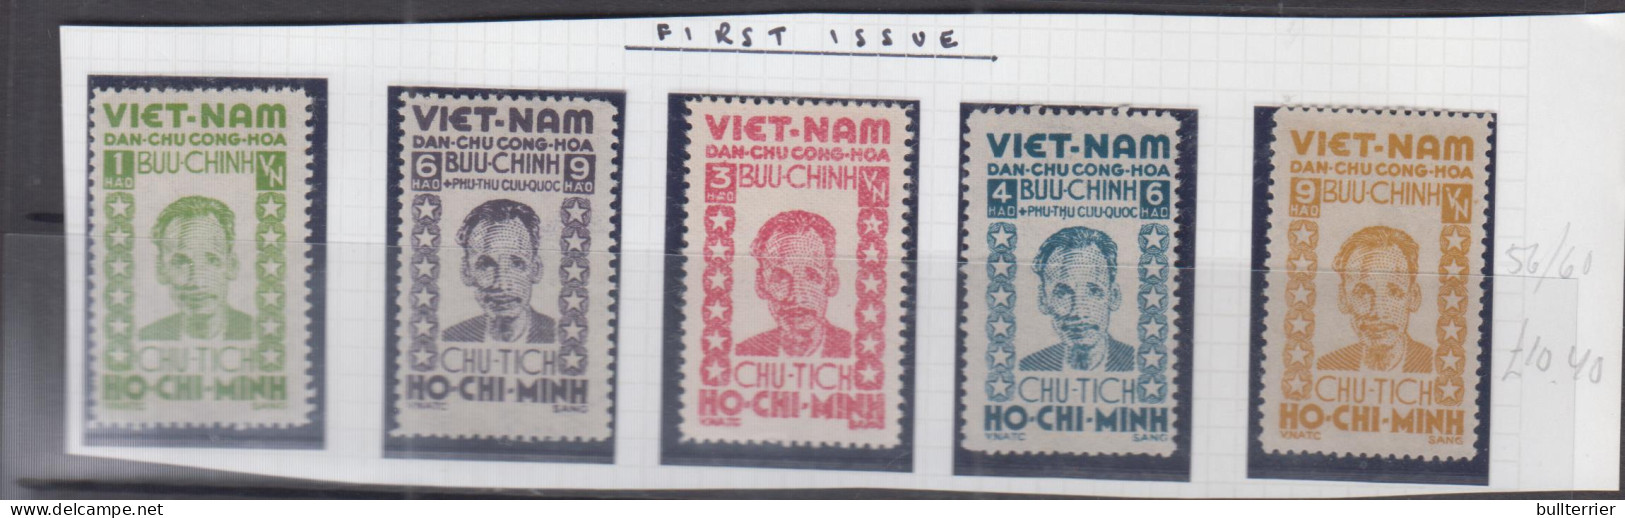 VIETNAM - HO CHU MINH 1ST ISSUE SET OF 5 UNUSED AS ISSUED, SG CAT£10.40 - Viêt-Nam